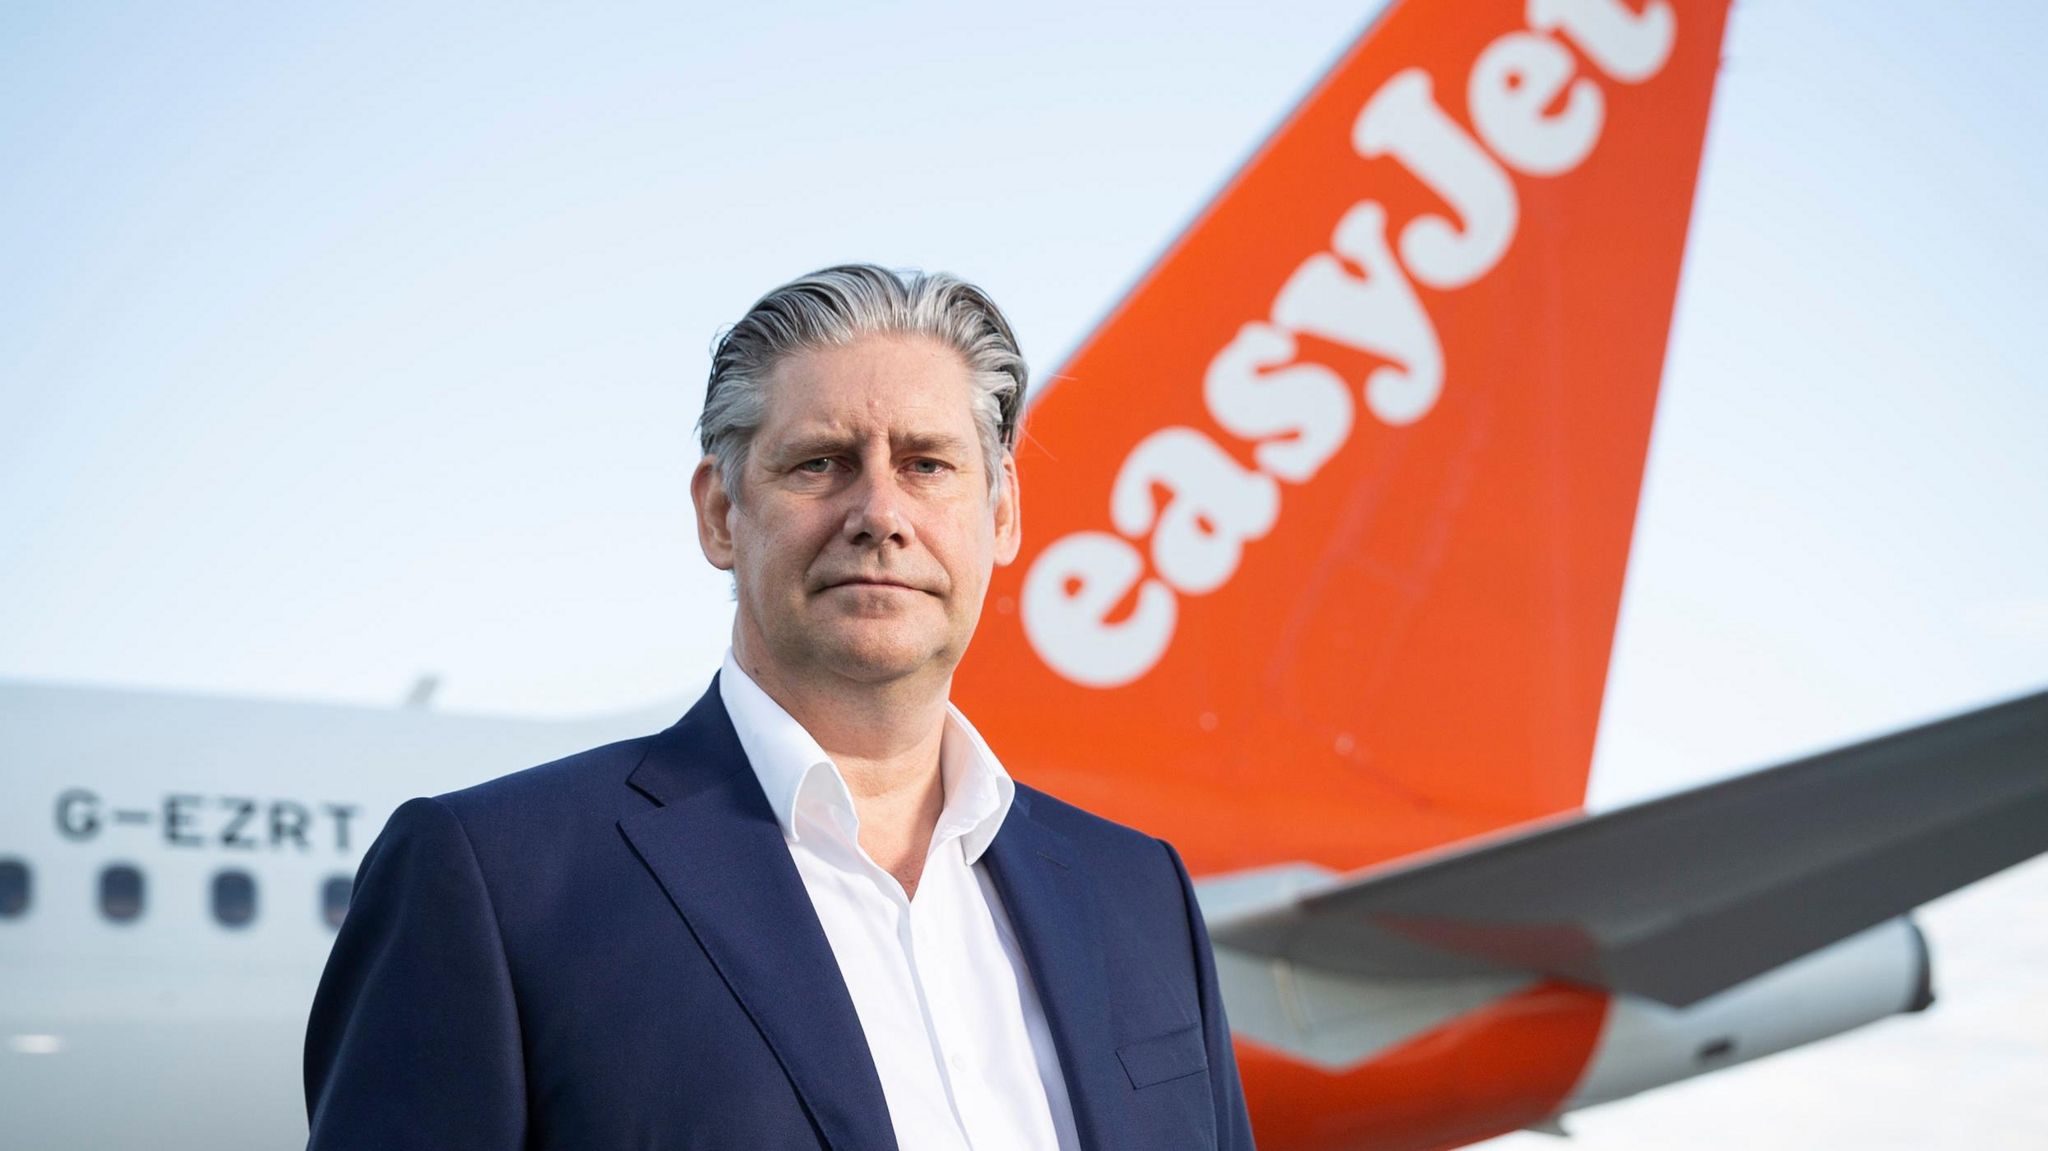 Johan Lundgren, EasyJet CEO